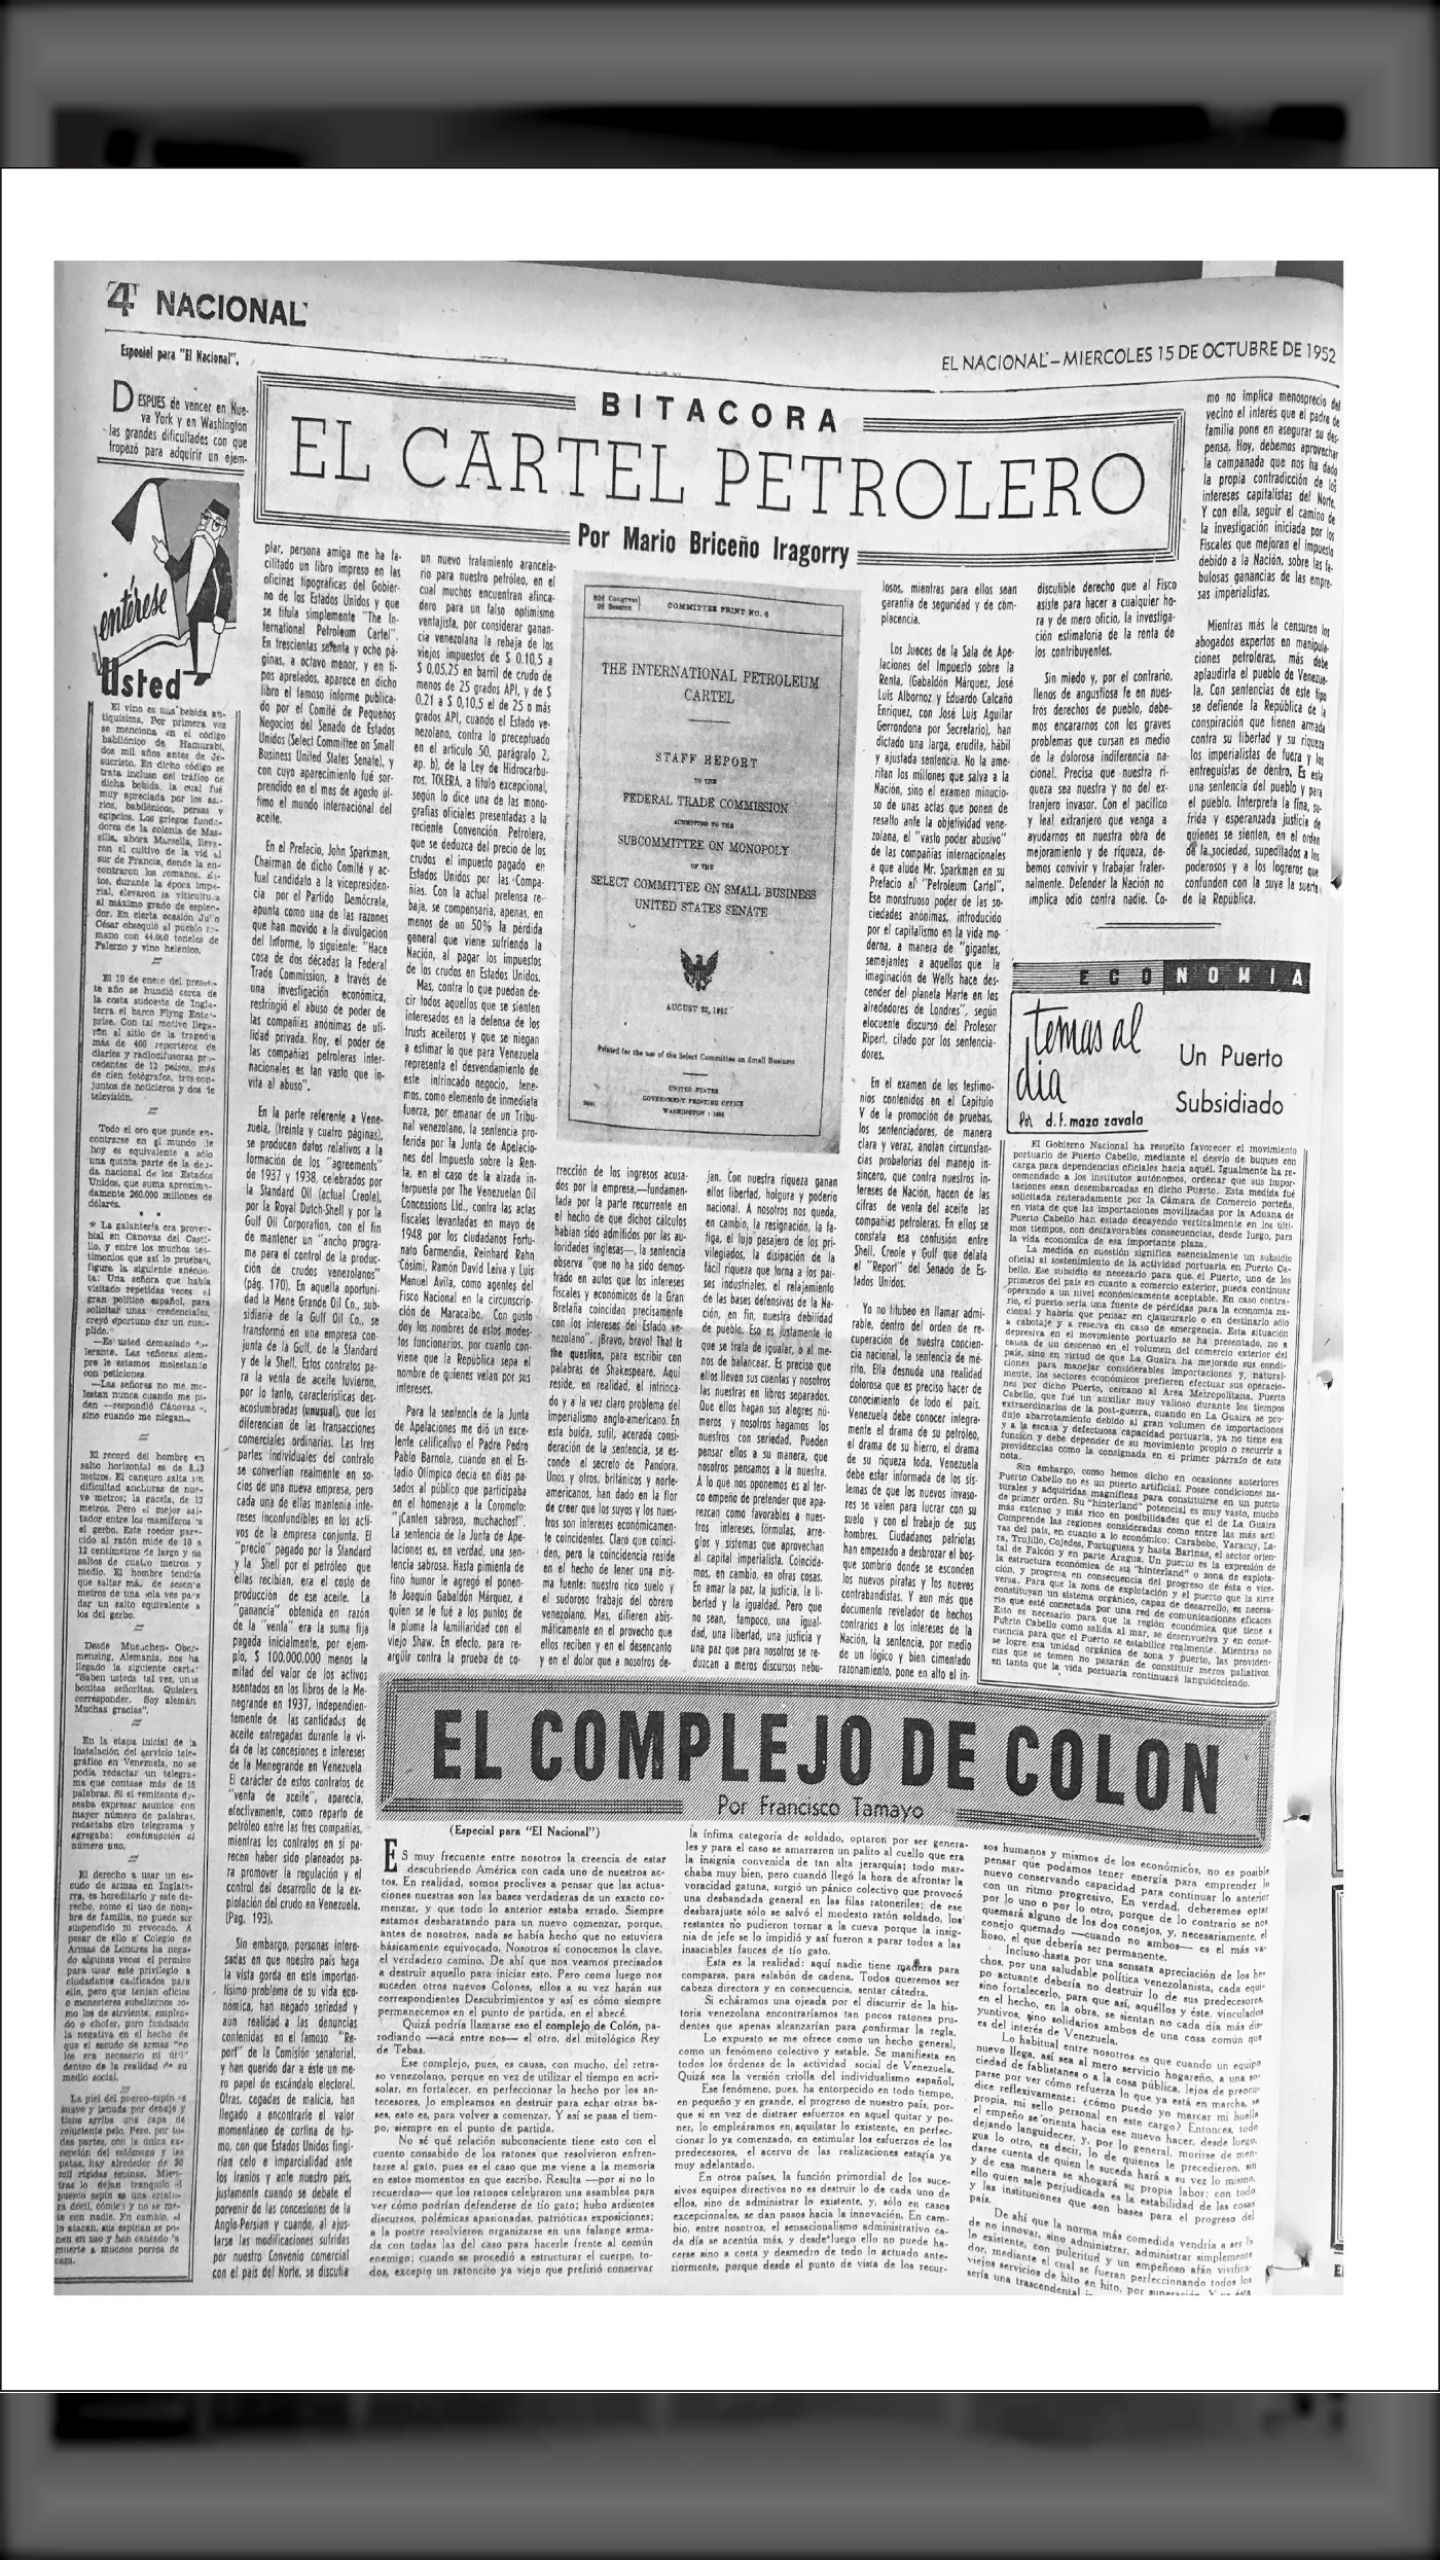 El cartel internacional del petróleo (El Nacional, 15 de octubre de 1952)